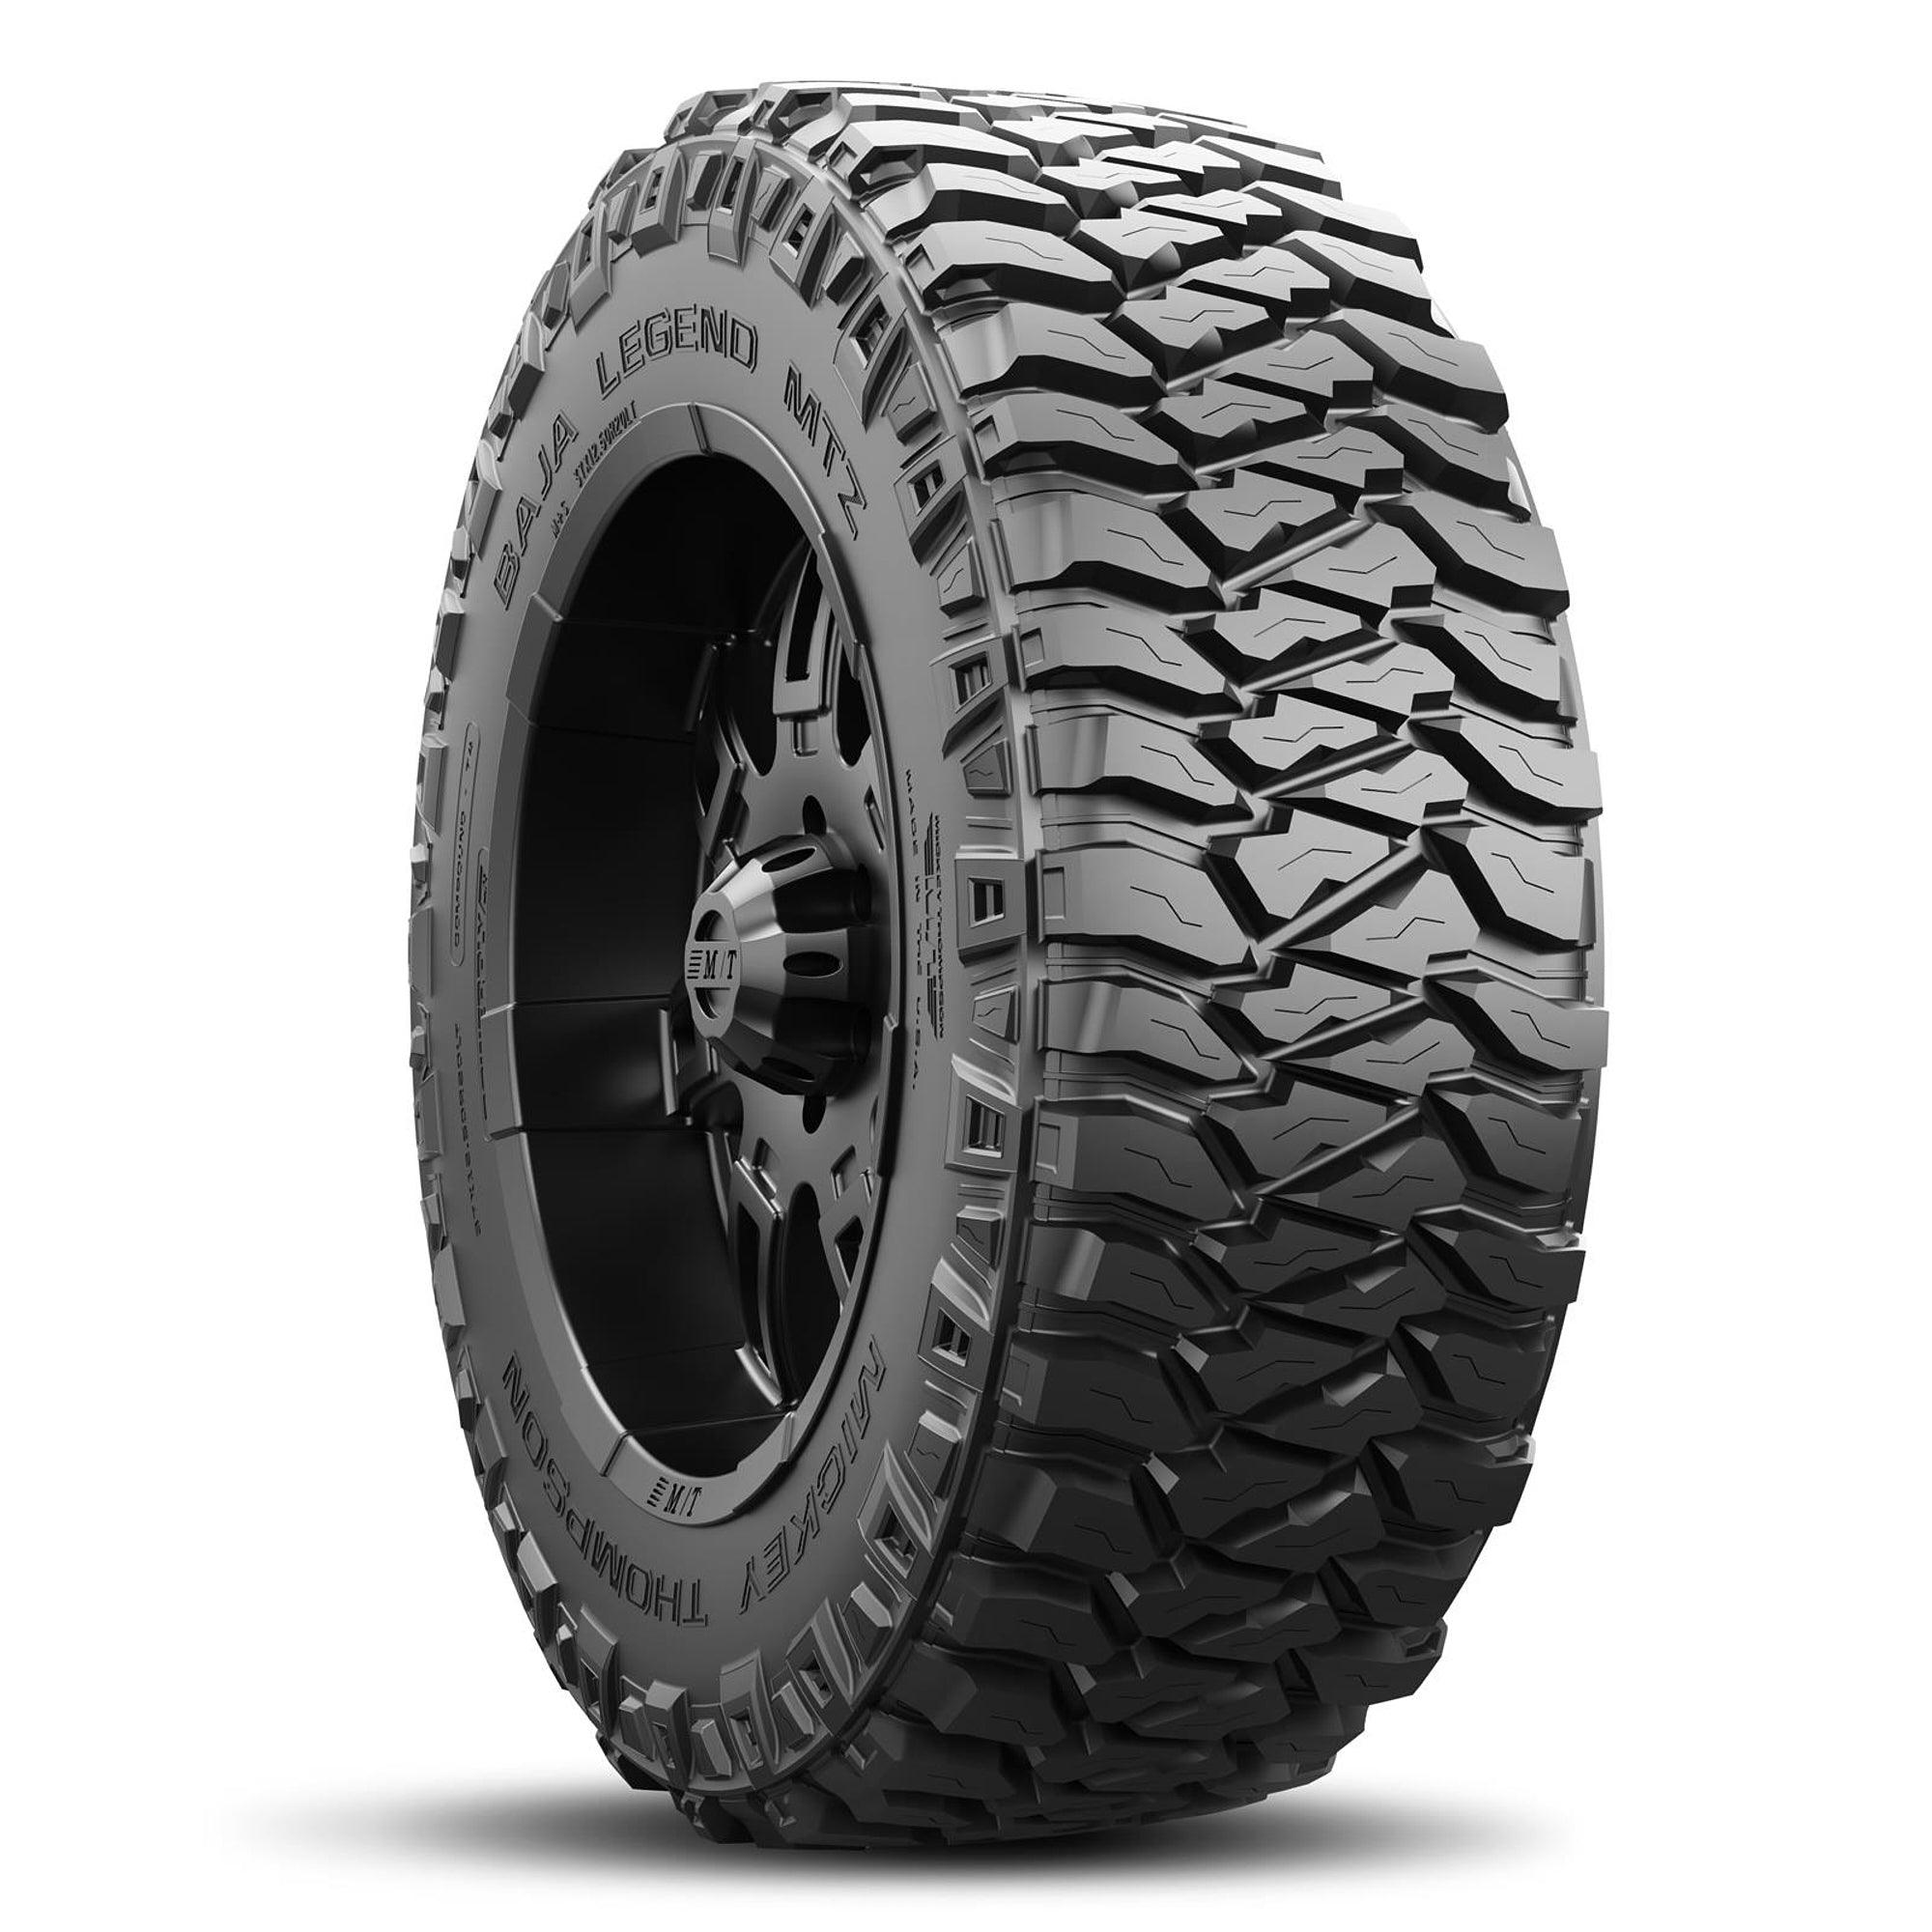 Baja Legend MTZ Tire LT275/70R18 125/122P - Burlile Performance Products